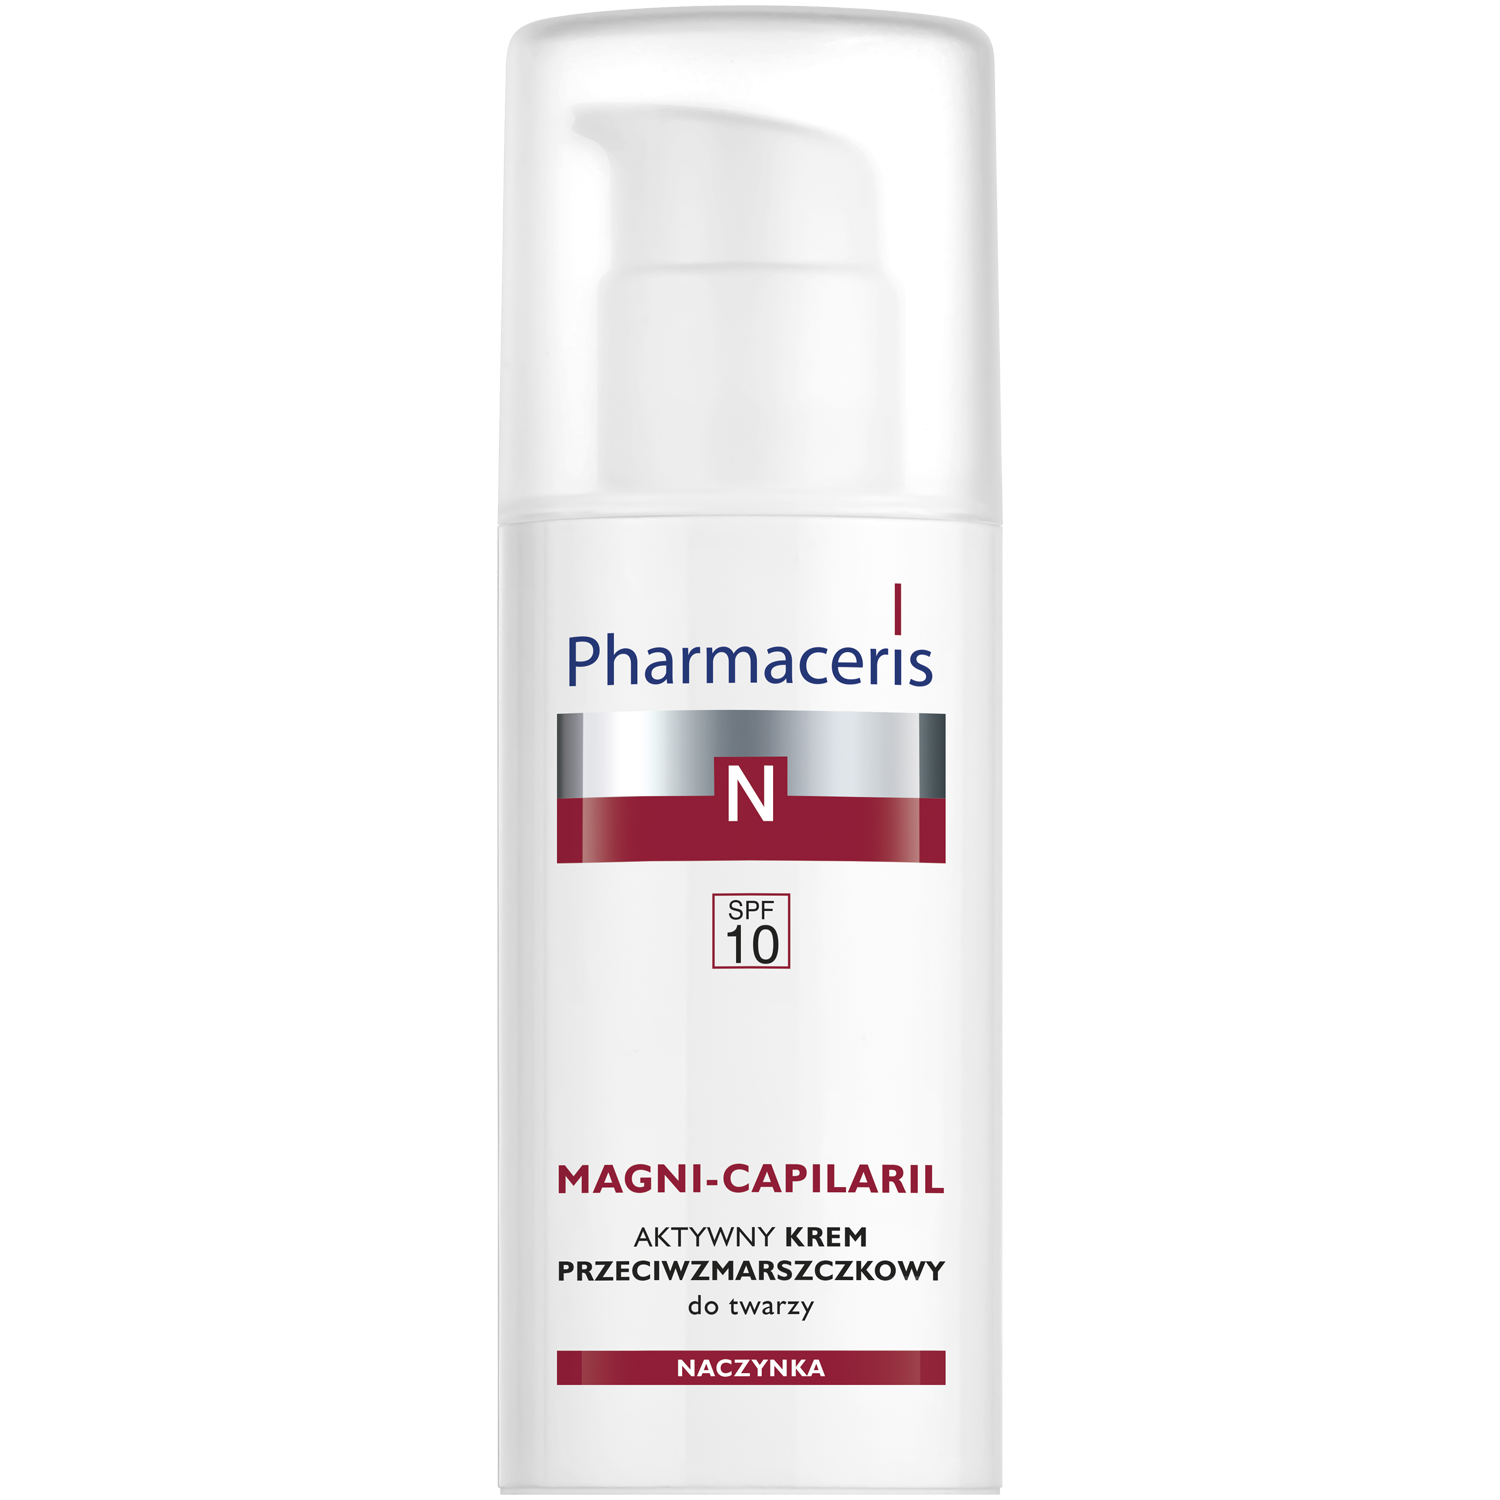 Pharmaceris N Magni-Capilaril активный крем для лица против морщин SPF10, 50 мл цена и фото